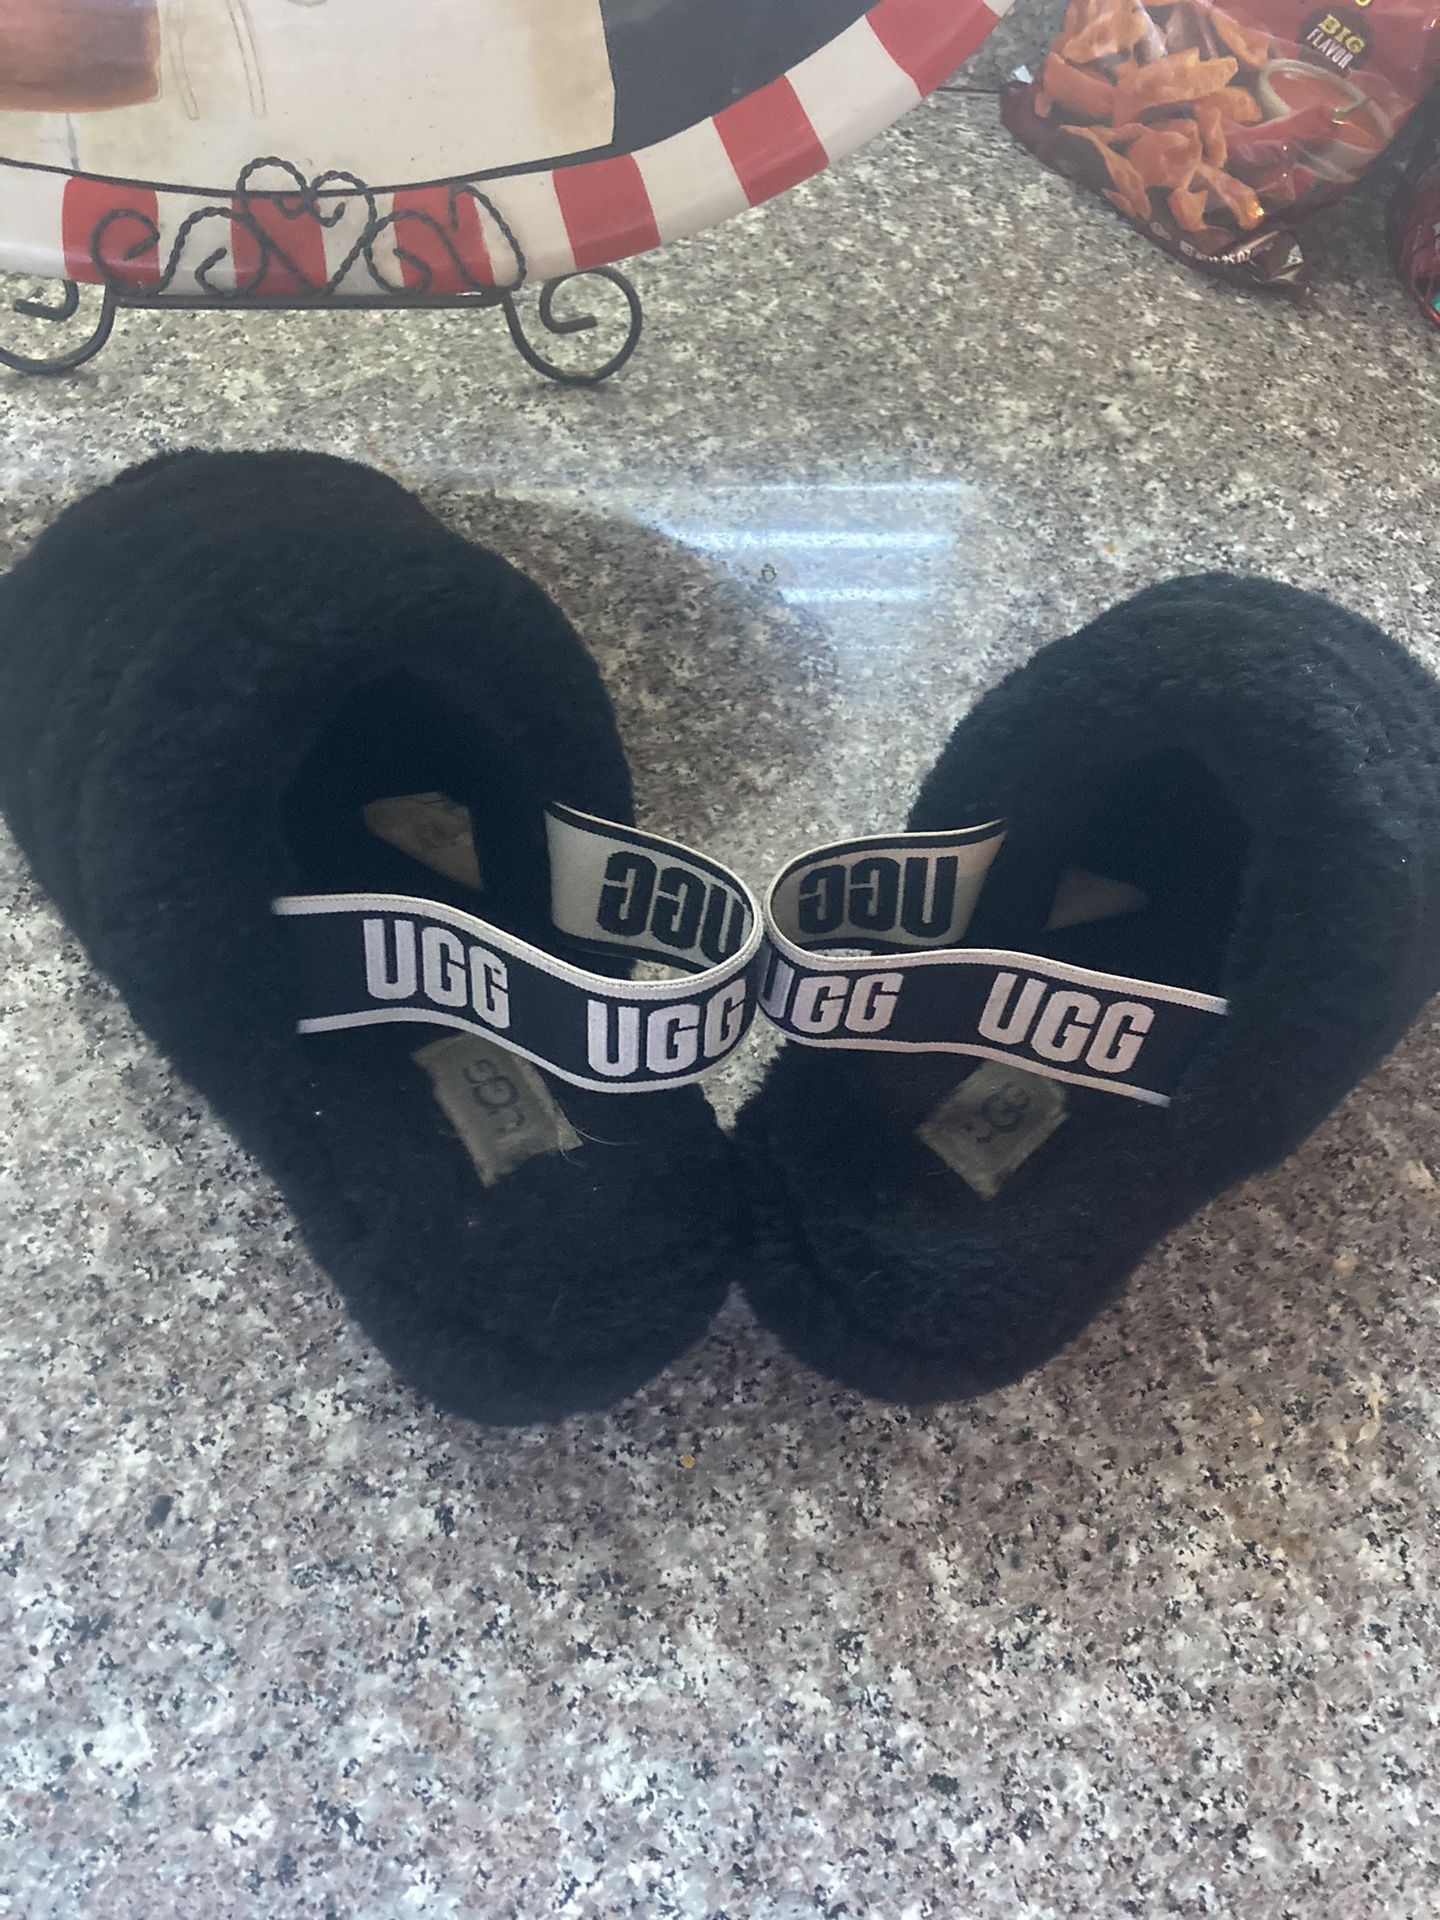 Ugg Fuzzy Slippers Size 8 